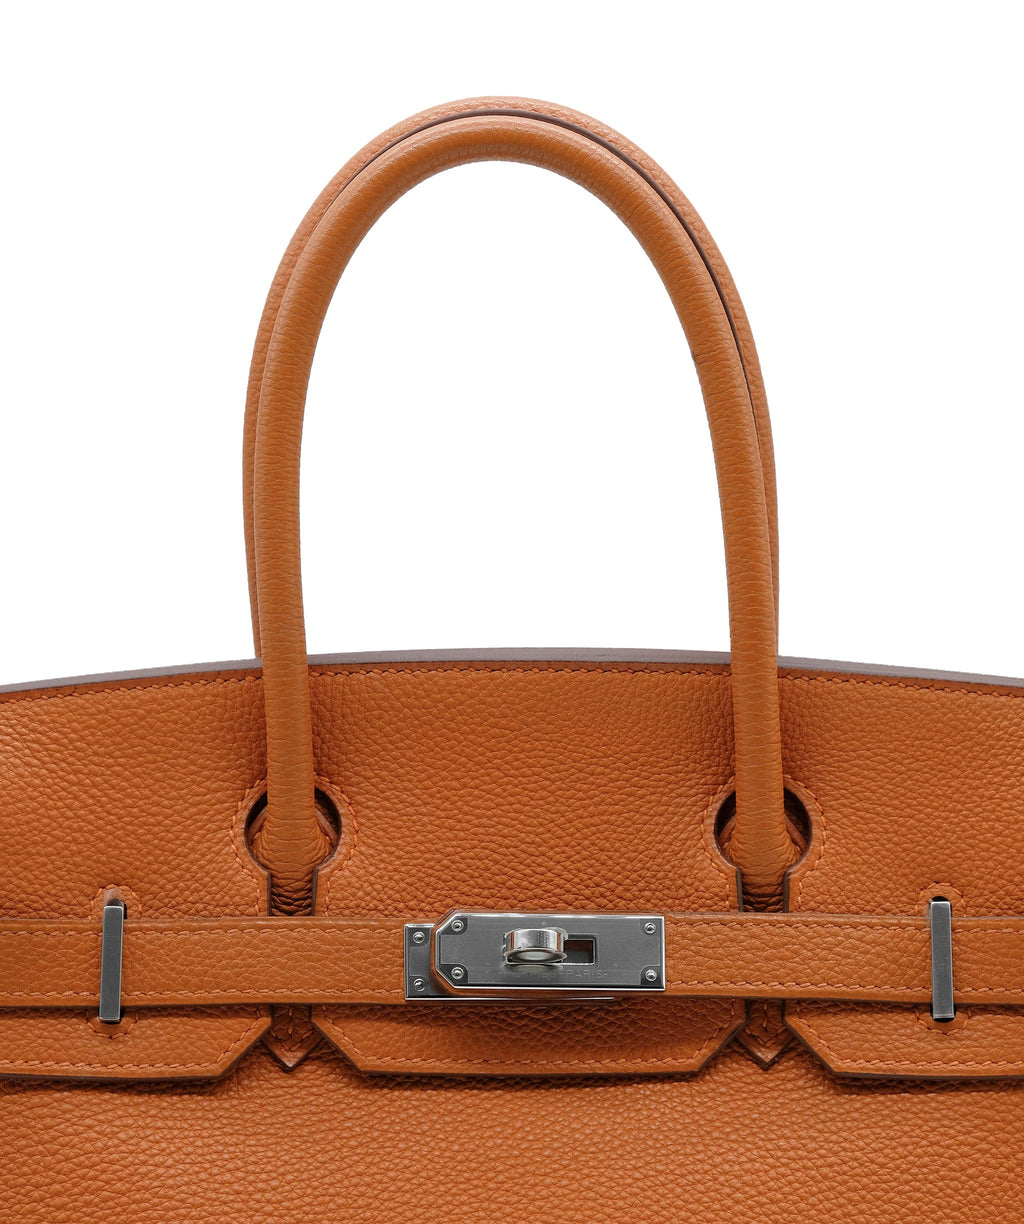 Hermès Orange Swift Birkin 30 30cm